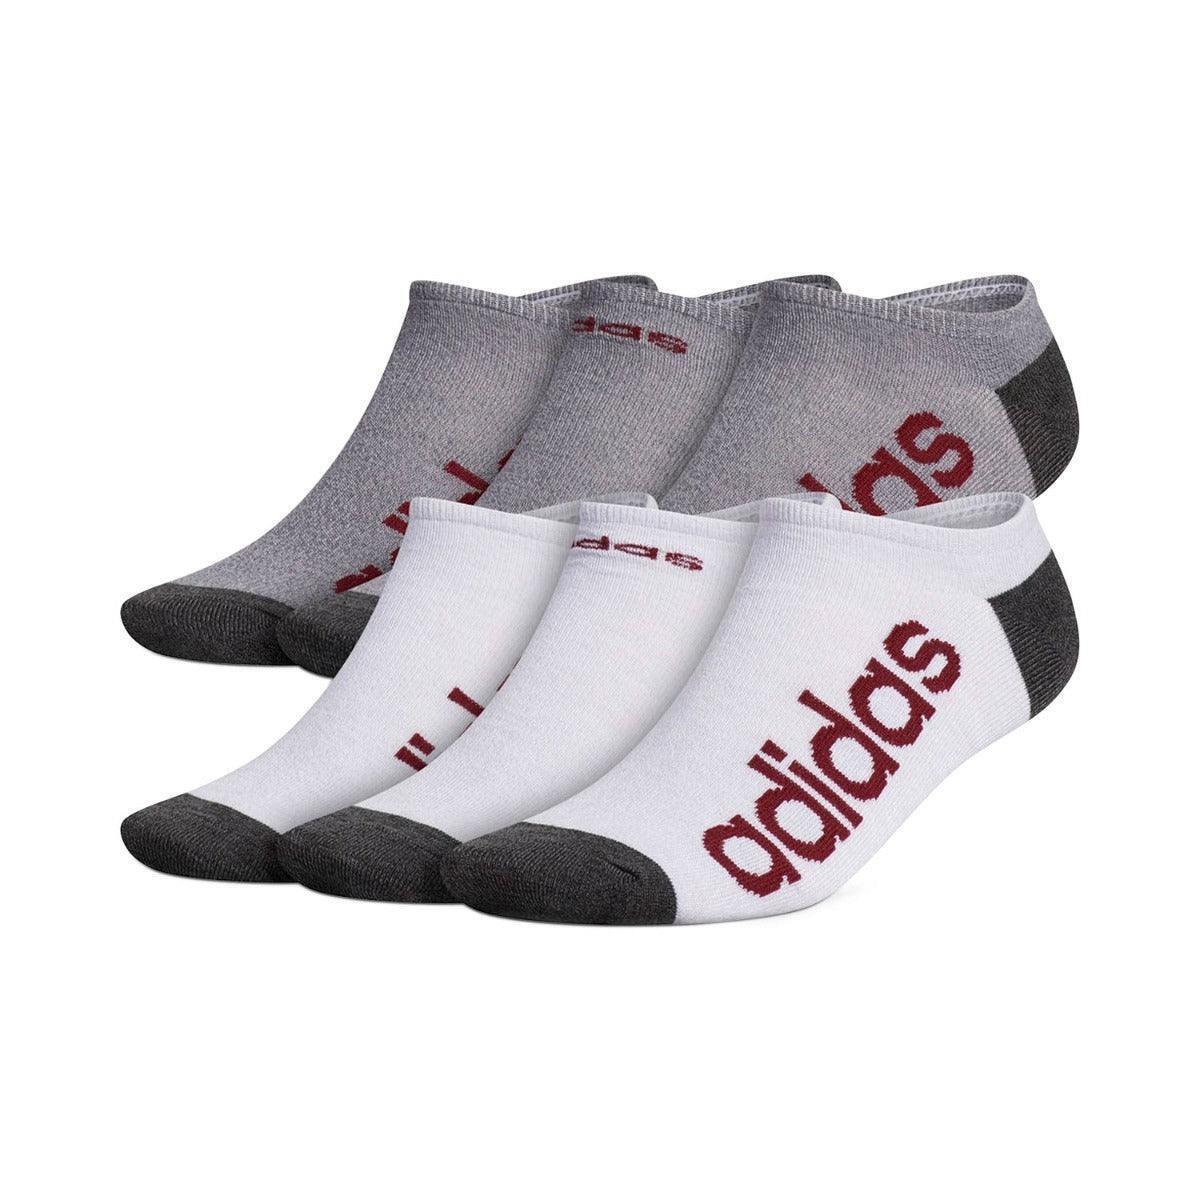 Adidas Athletic Superlite No Show Socks (6 Pairs) - One Size